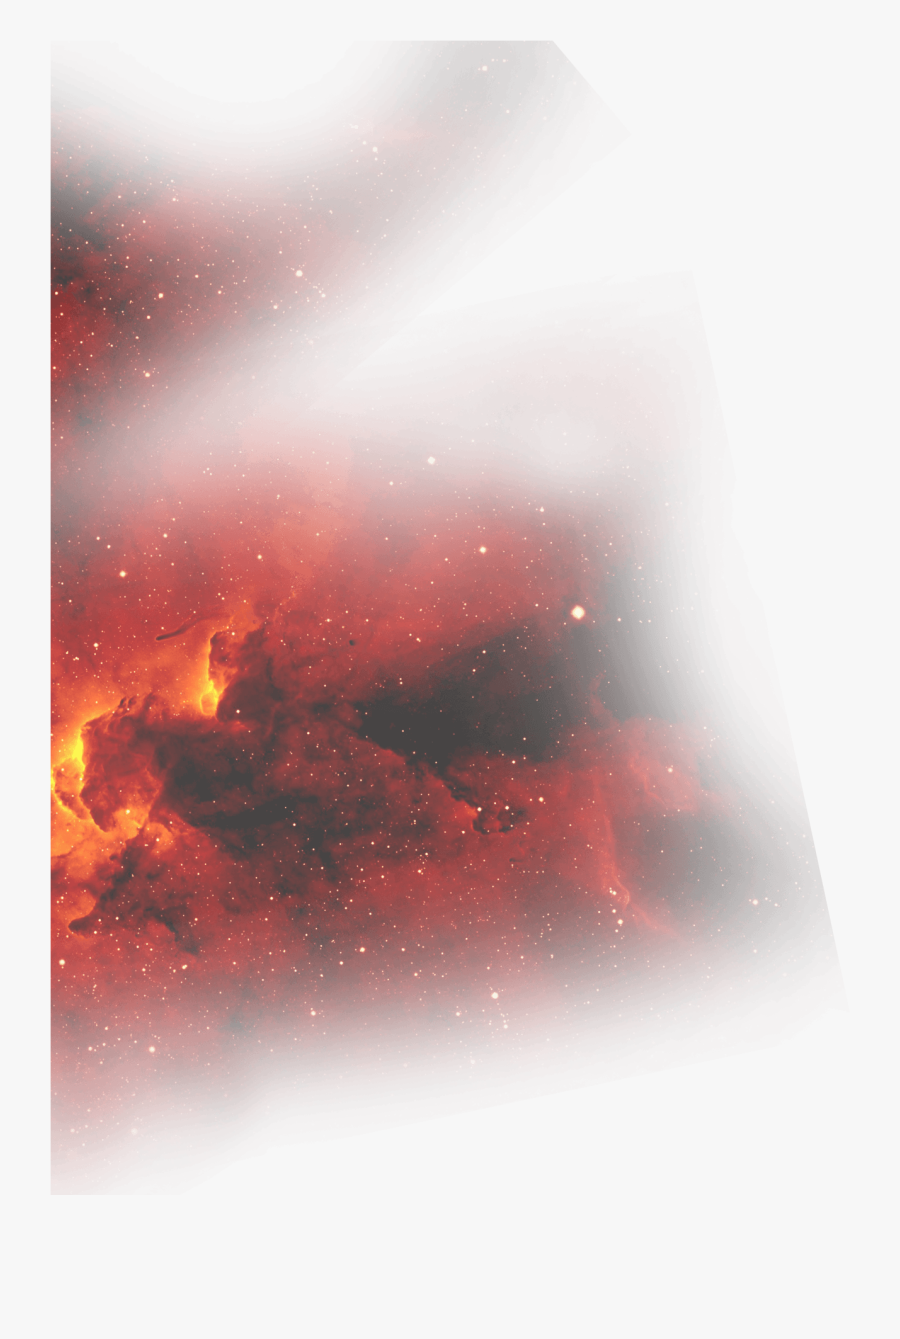 Space Nebula Transparent Png, Transparent Clipart